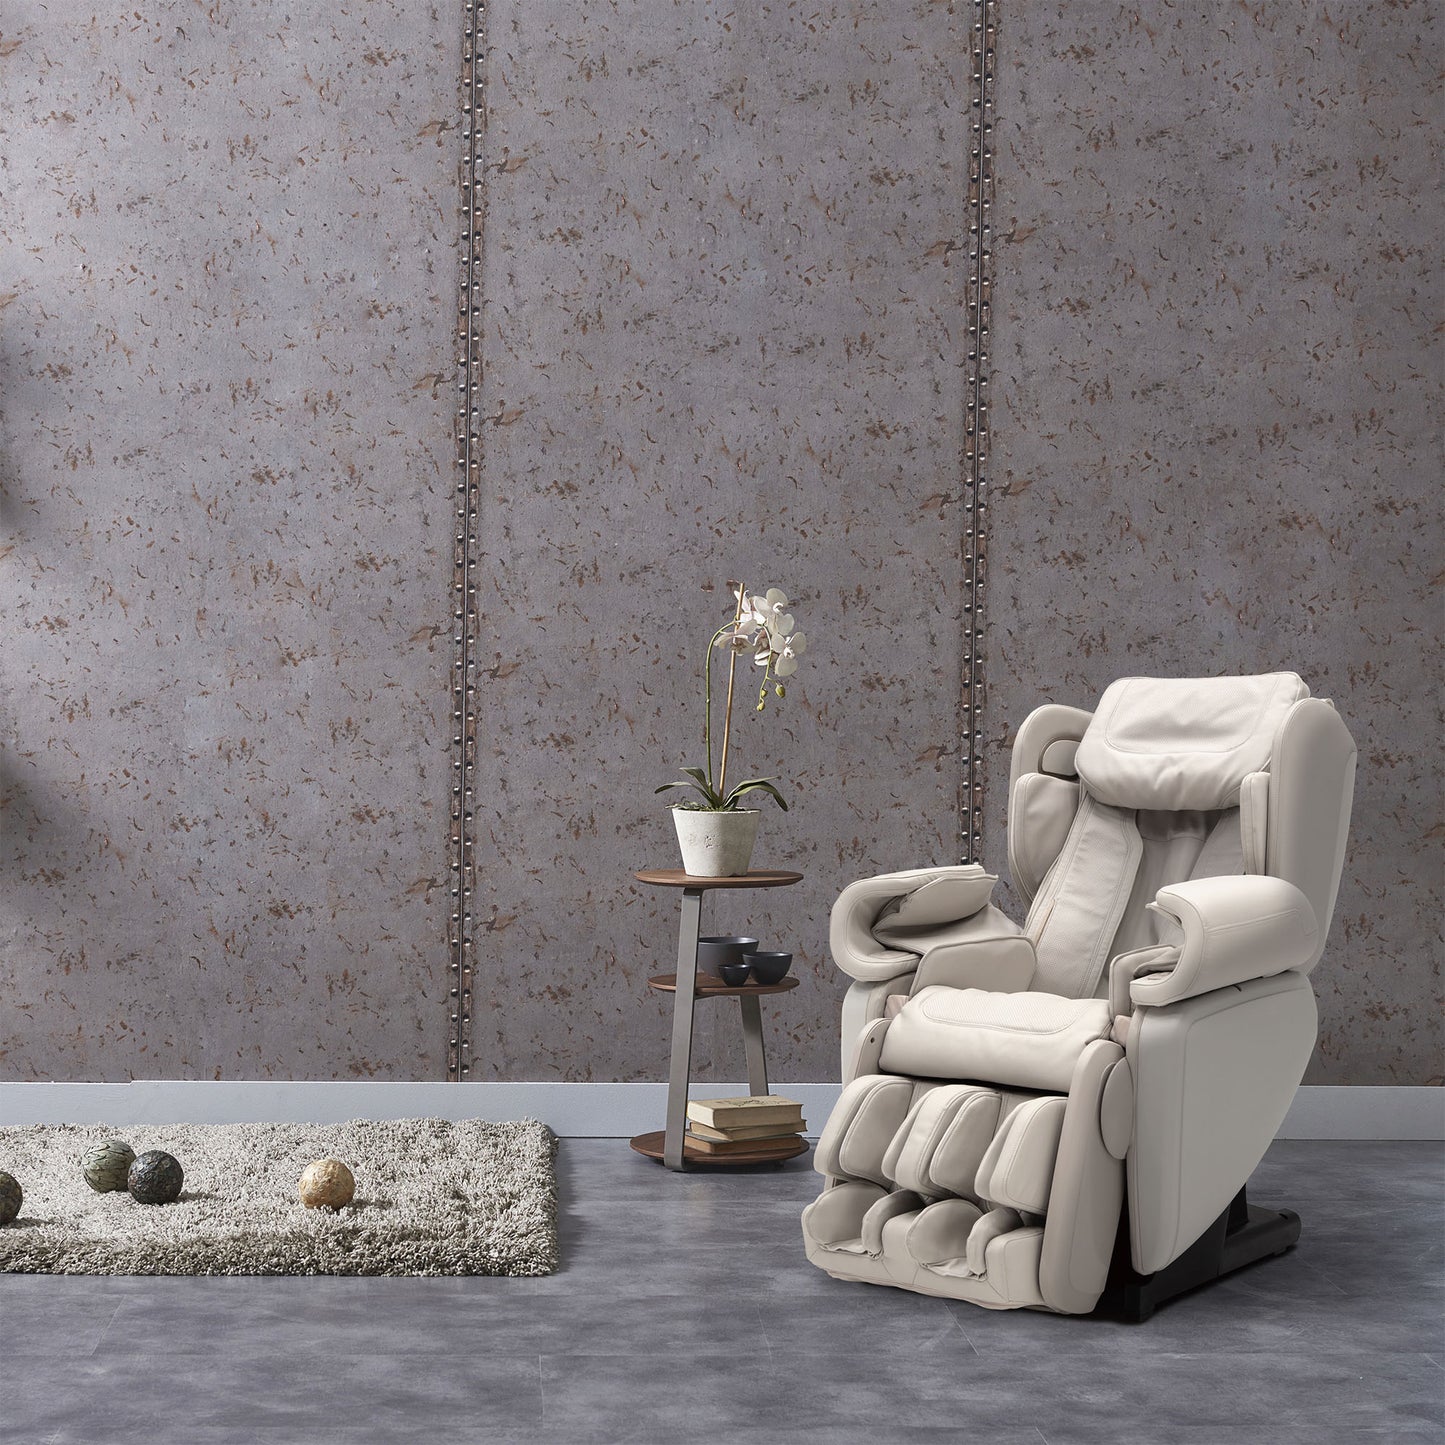 Synca Kagra - 4D Premium Massage chair